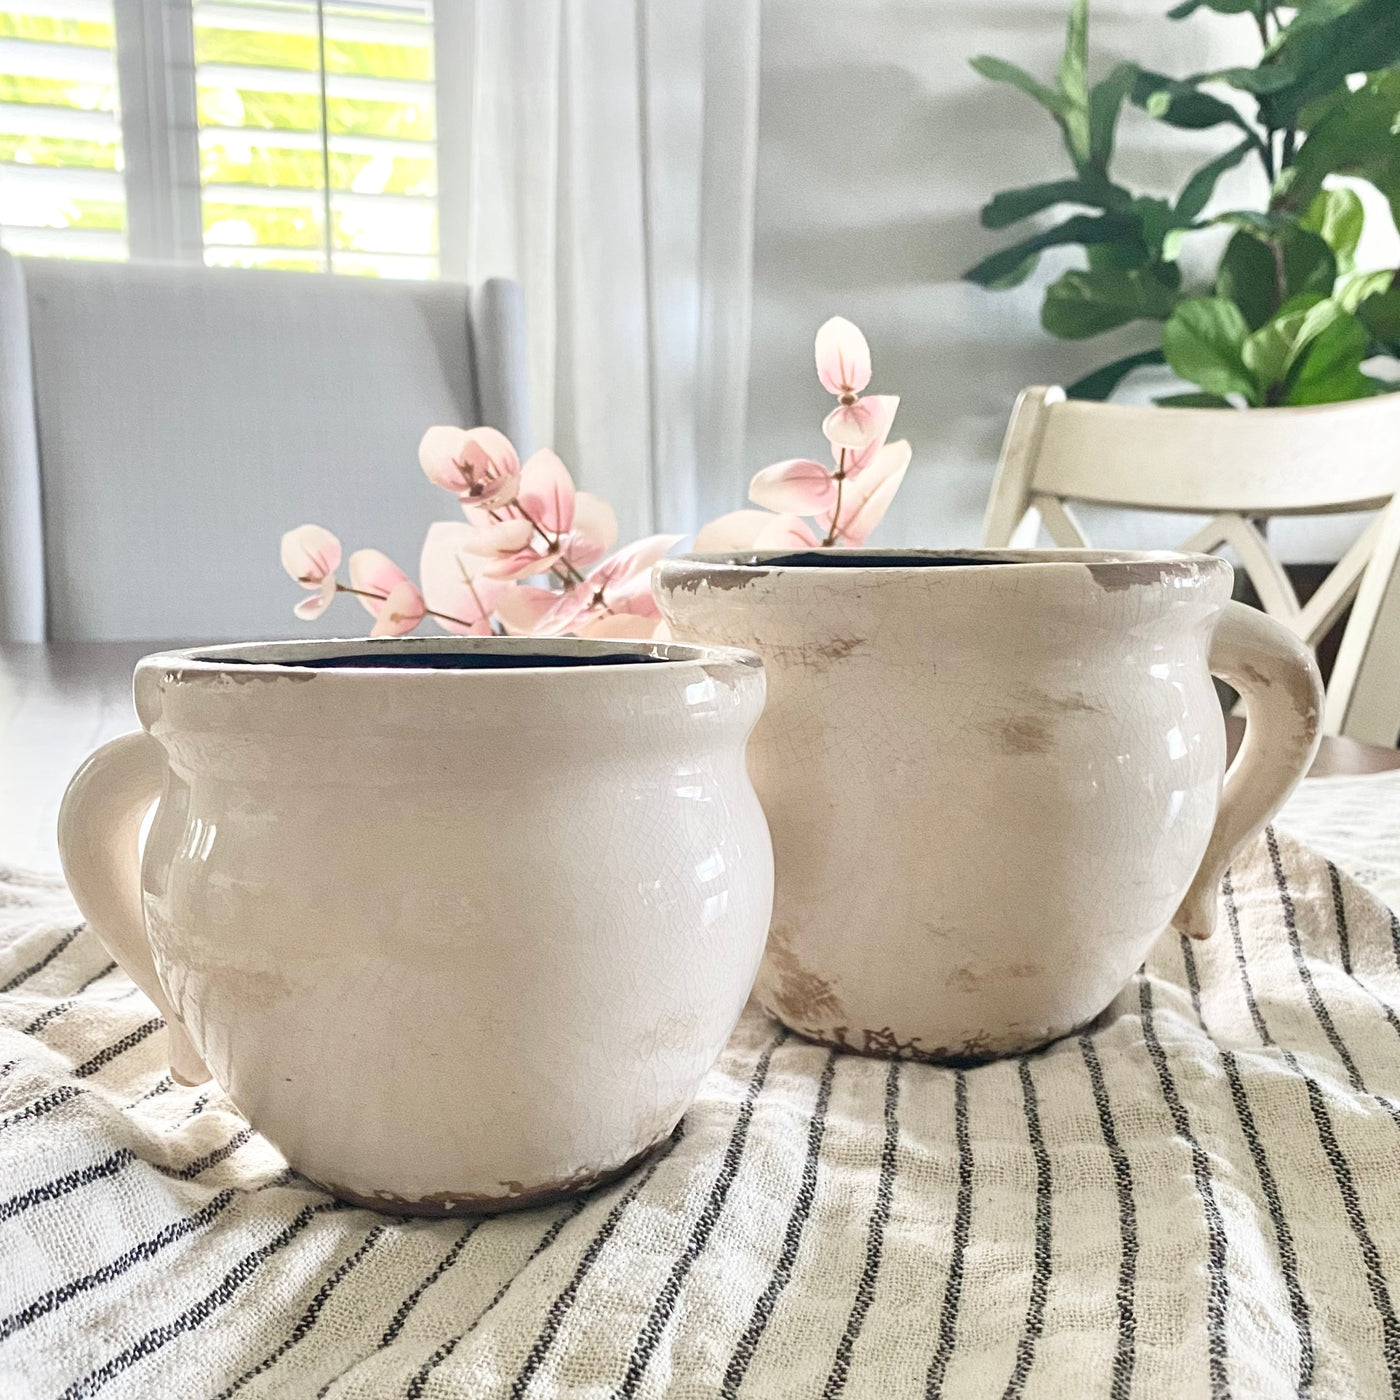 Glazed Ceramic Flower Pots With Handles